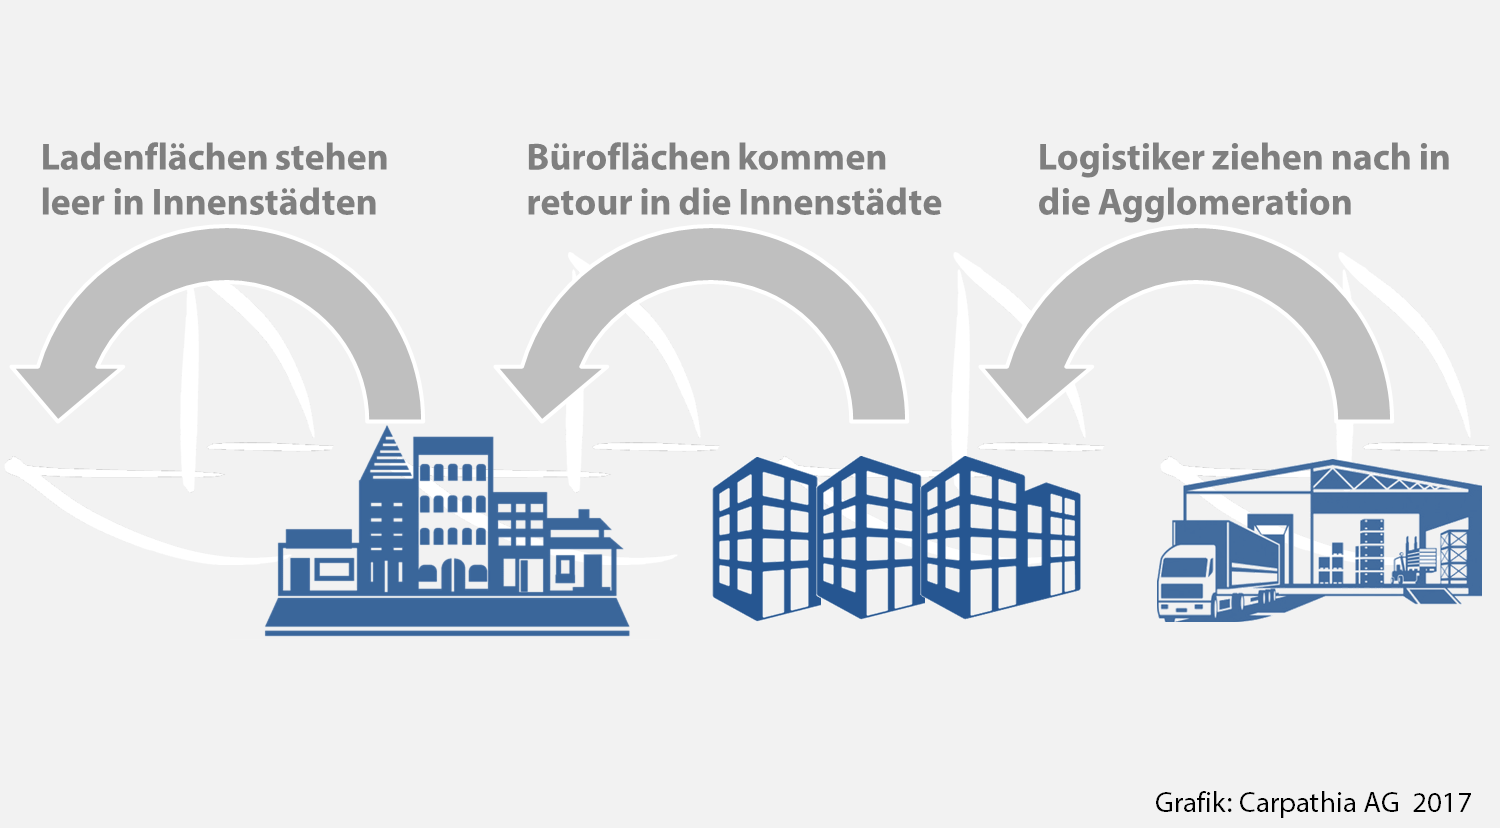 Der Store-Office-Logistics-Shift - Grafik: Carpathia AG 2017